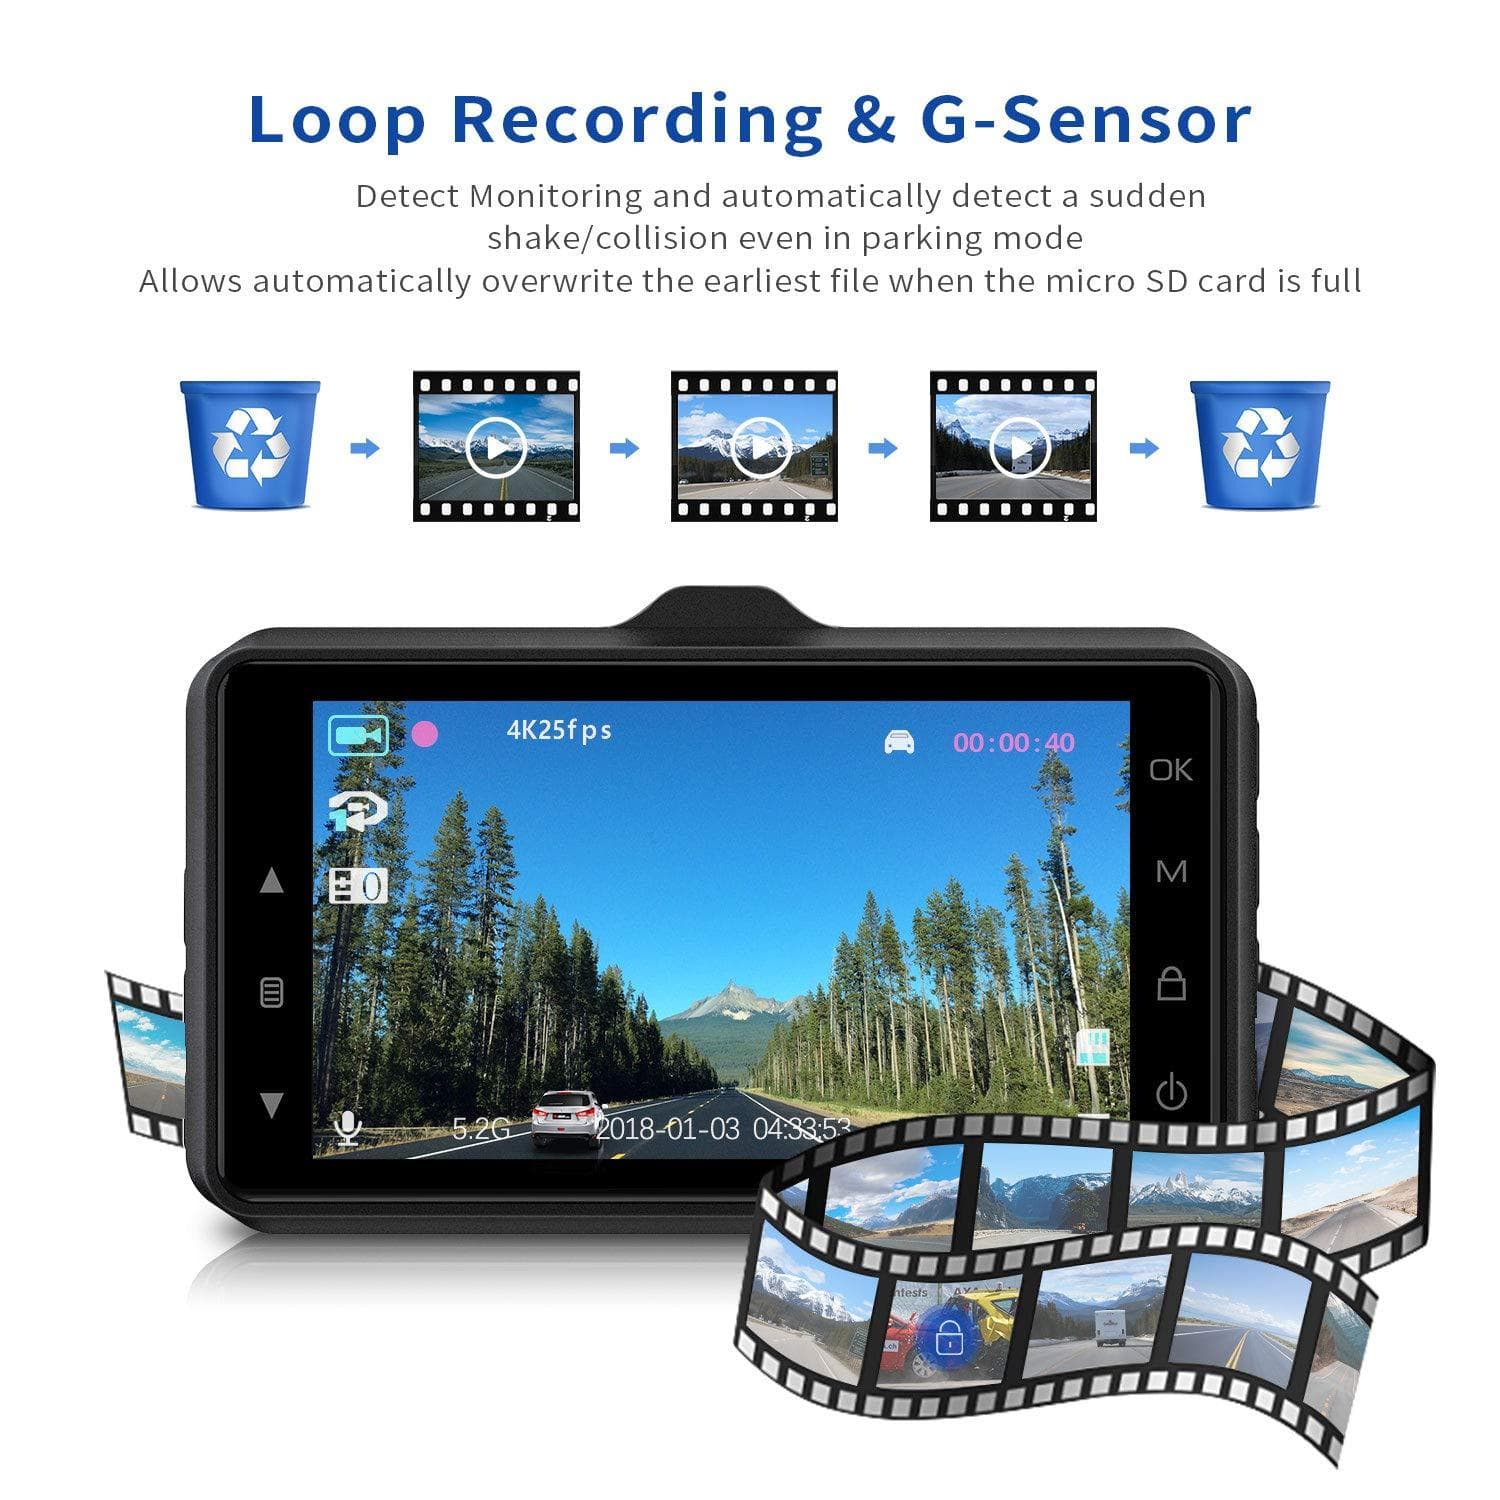 Campark DC10 Dash Cam supports loop recording & G-Sensor